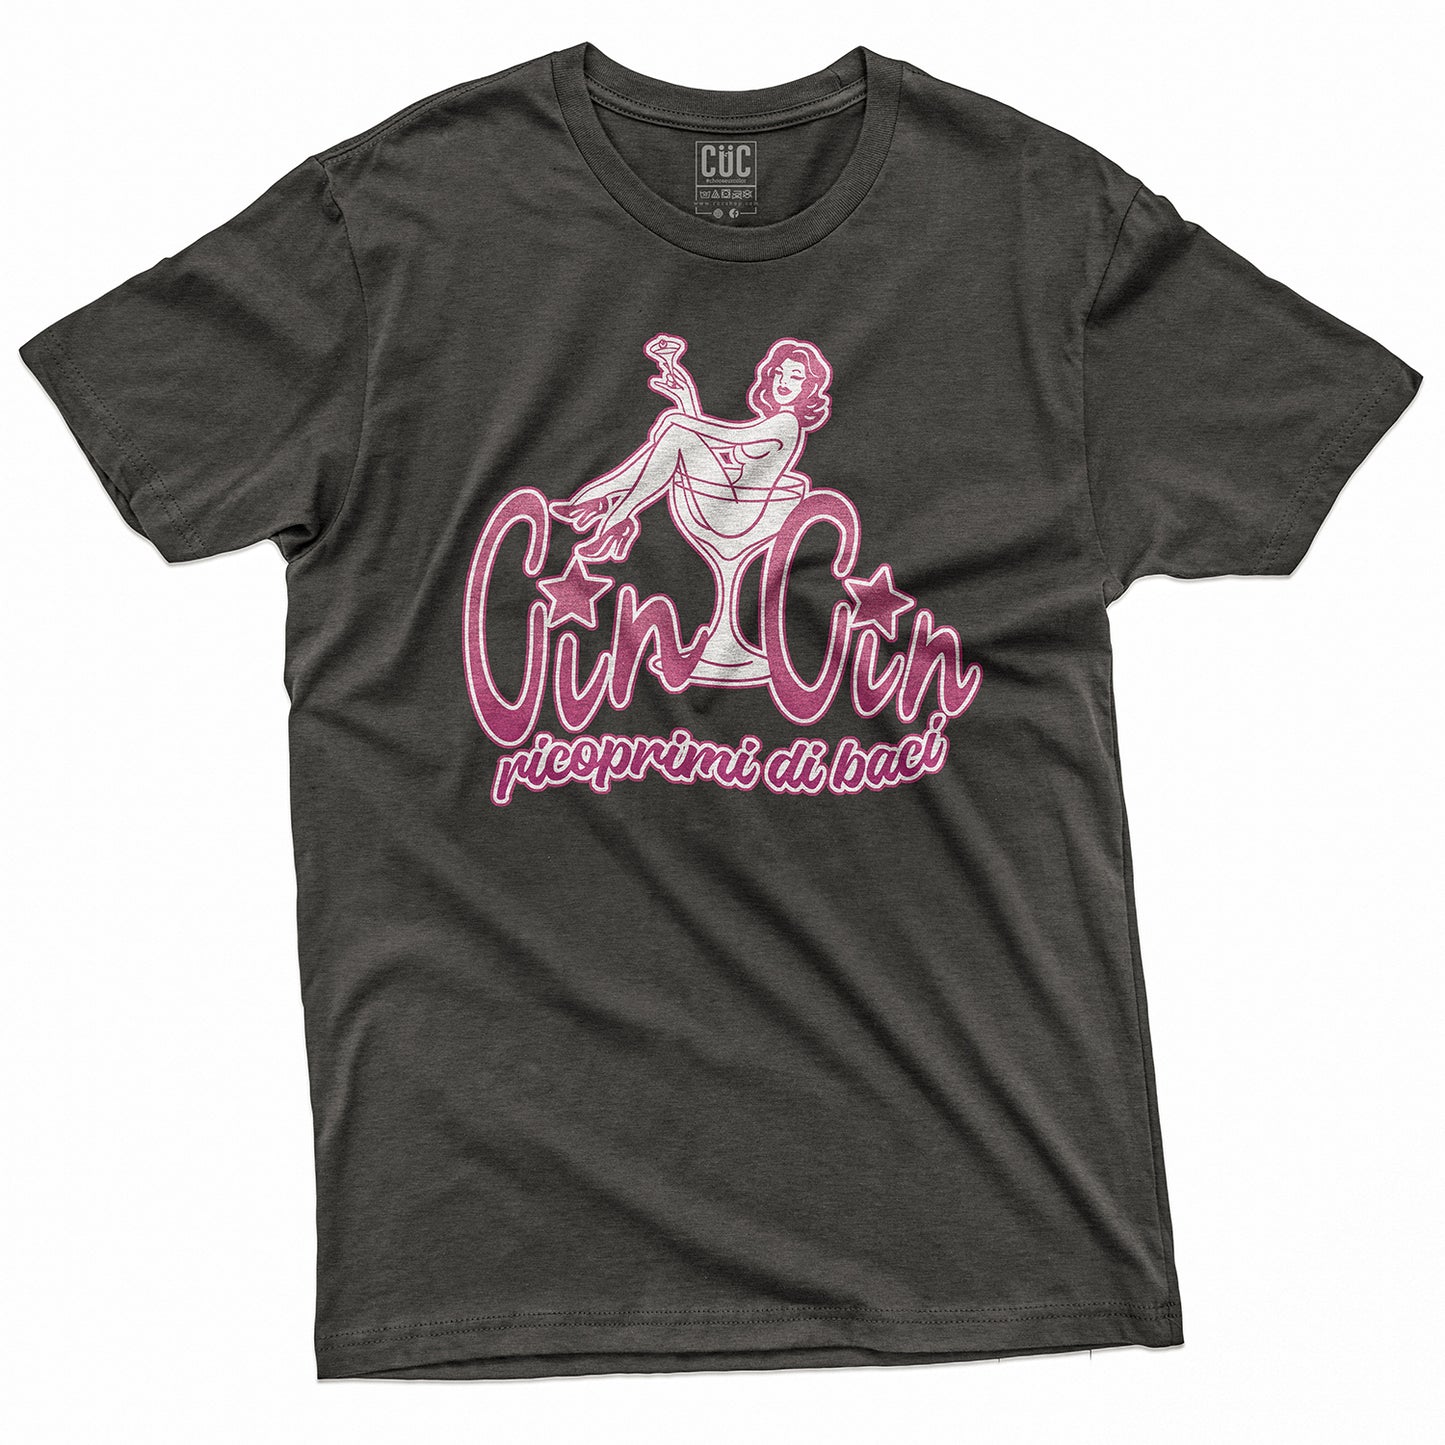 CUC T-Shirt CIN CIN - Ragazze Colpo Grosso - Tv Cult  #chooseurcolor - CUC chooseurcolor